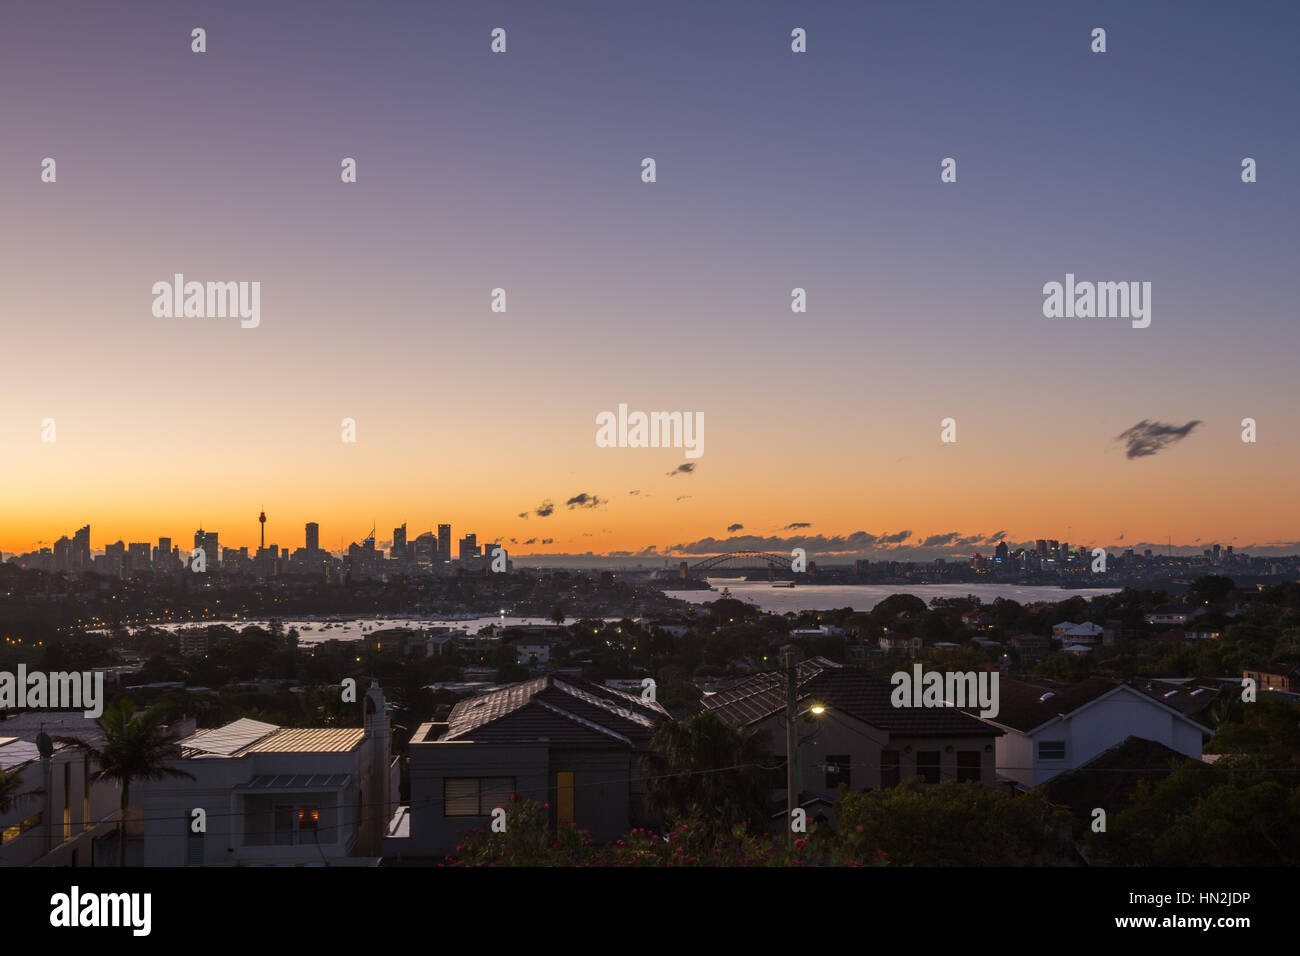 Skyline di Sydney visto dal lontano oriente del porto al tramonto. Sydney, Australia Foto Stock